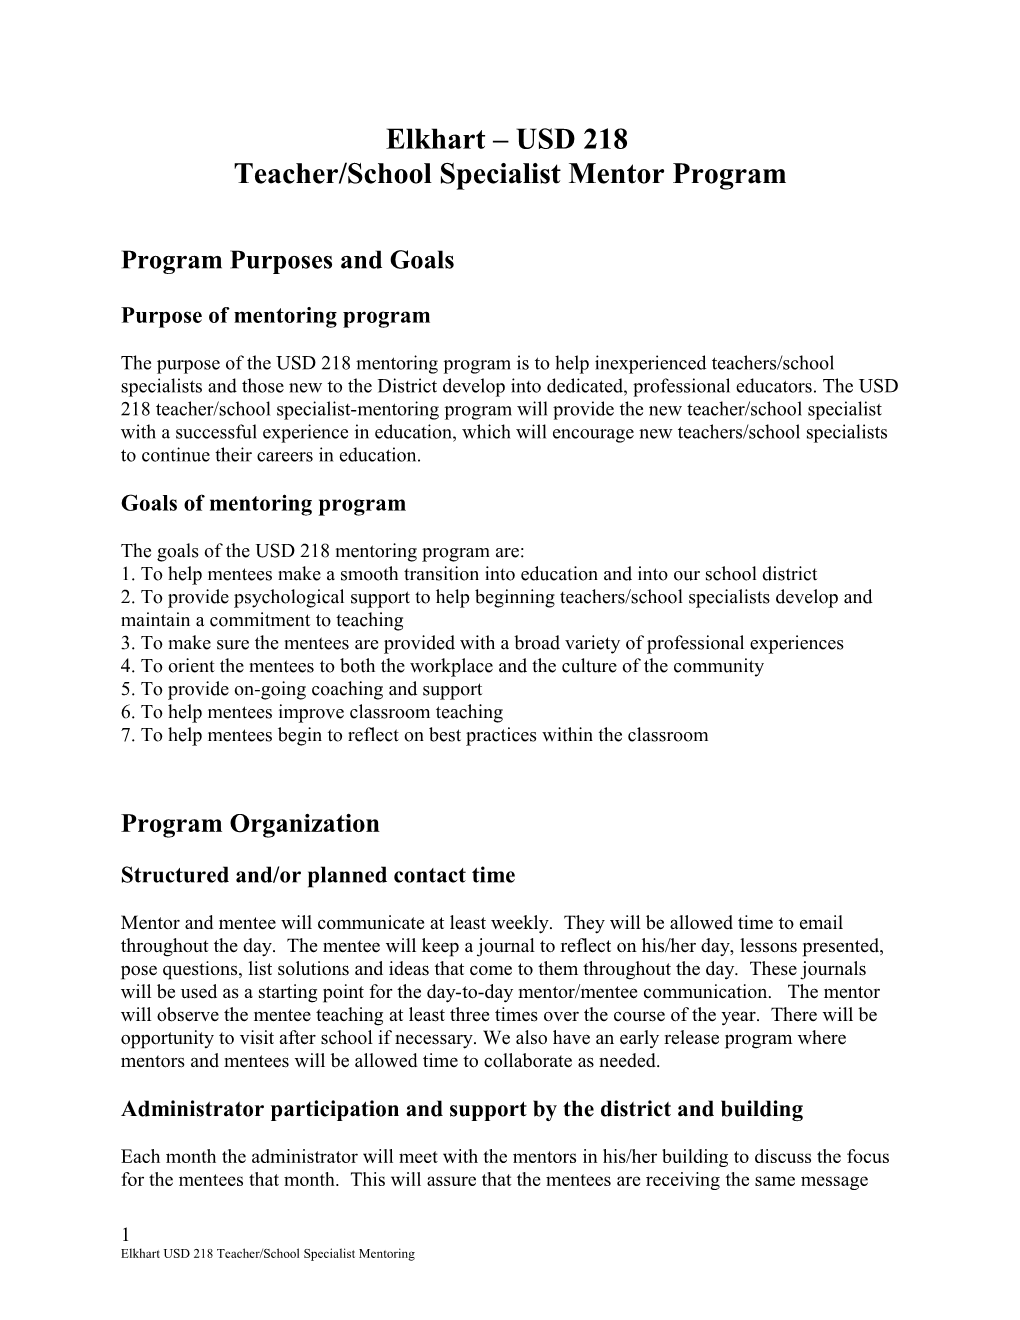 Teacher/School Specialistmentor Program